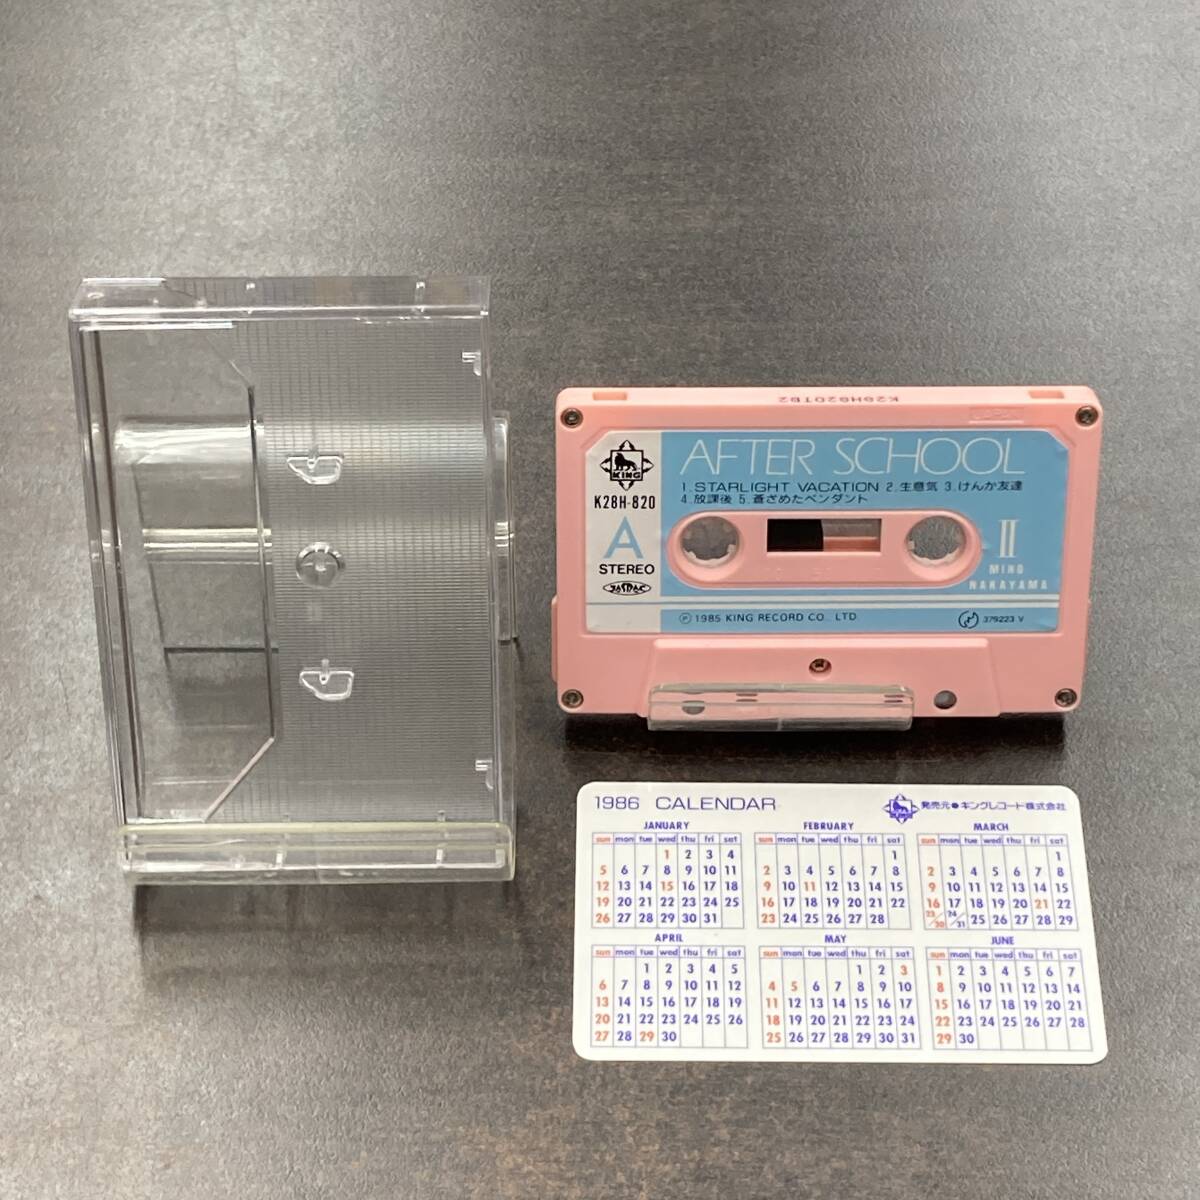 1135M 中山美穂 AFTER SCHOOL カセットテープ / Miho Nakayama Idol Cassette Tapeの画像2